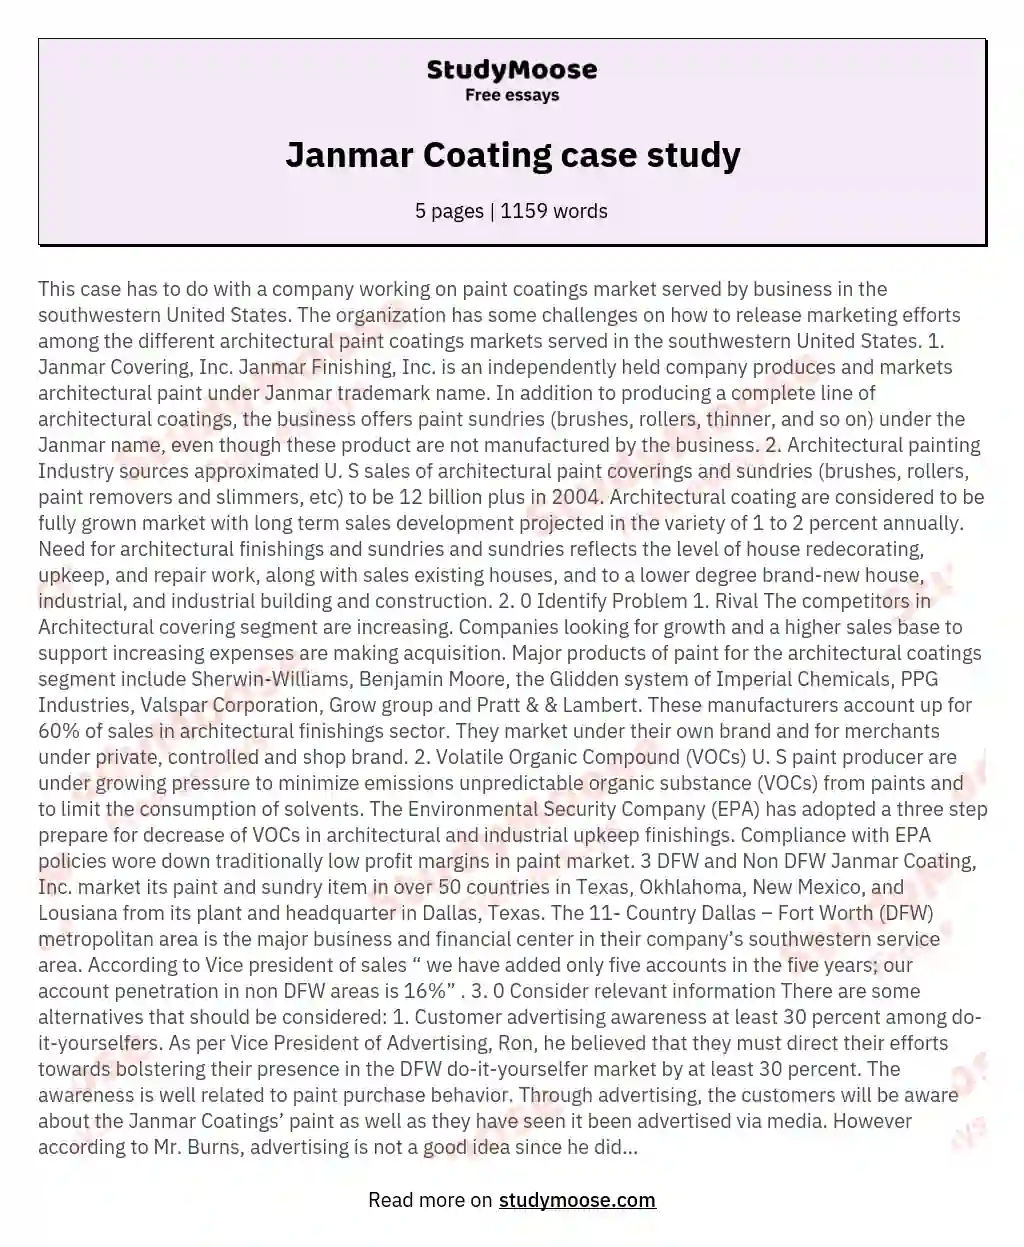 Janmar Coating case study essay